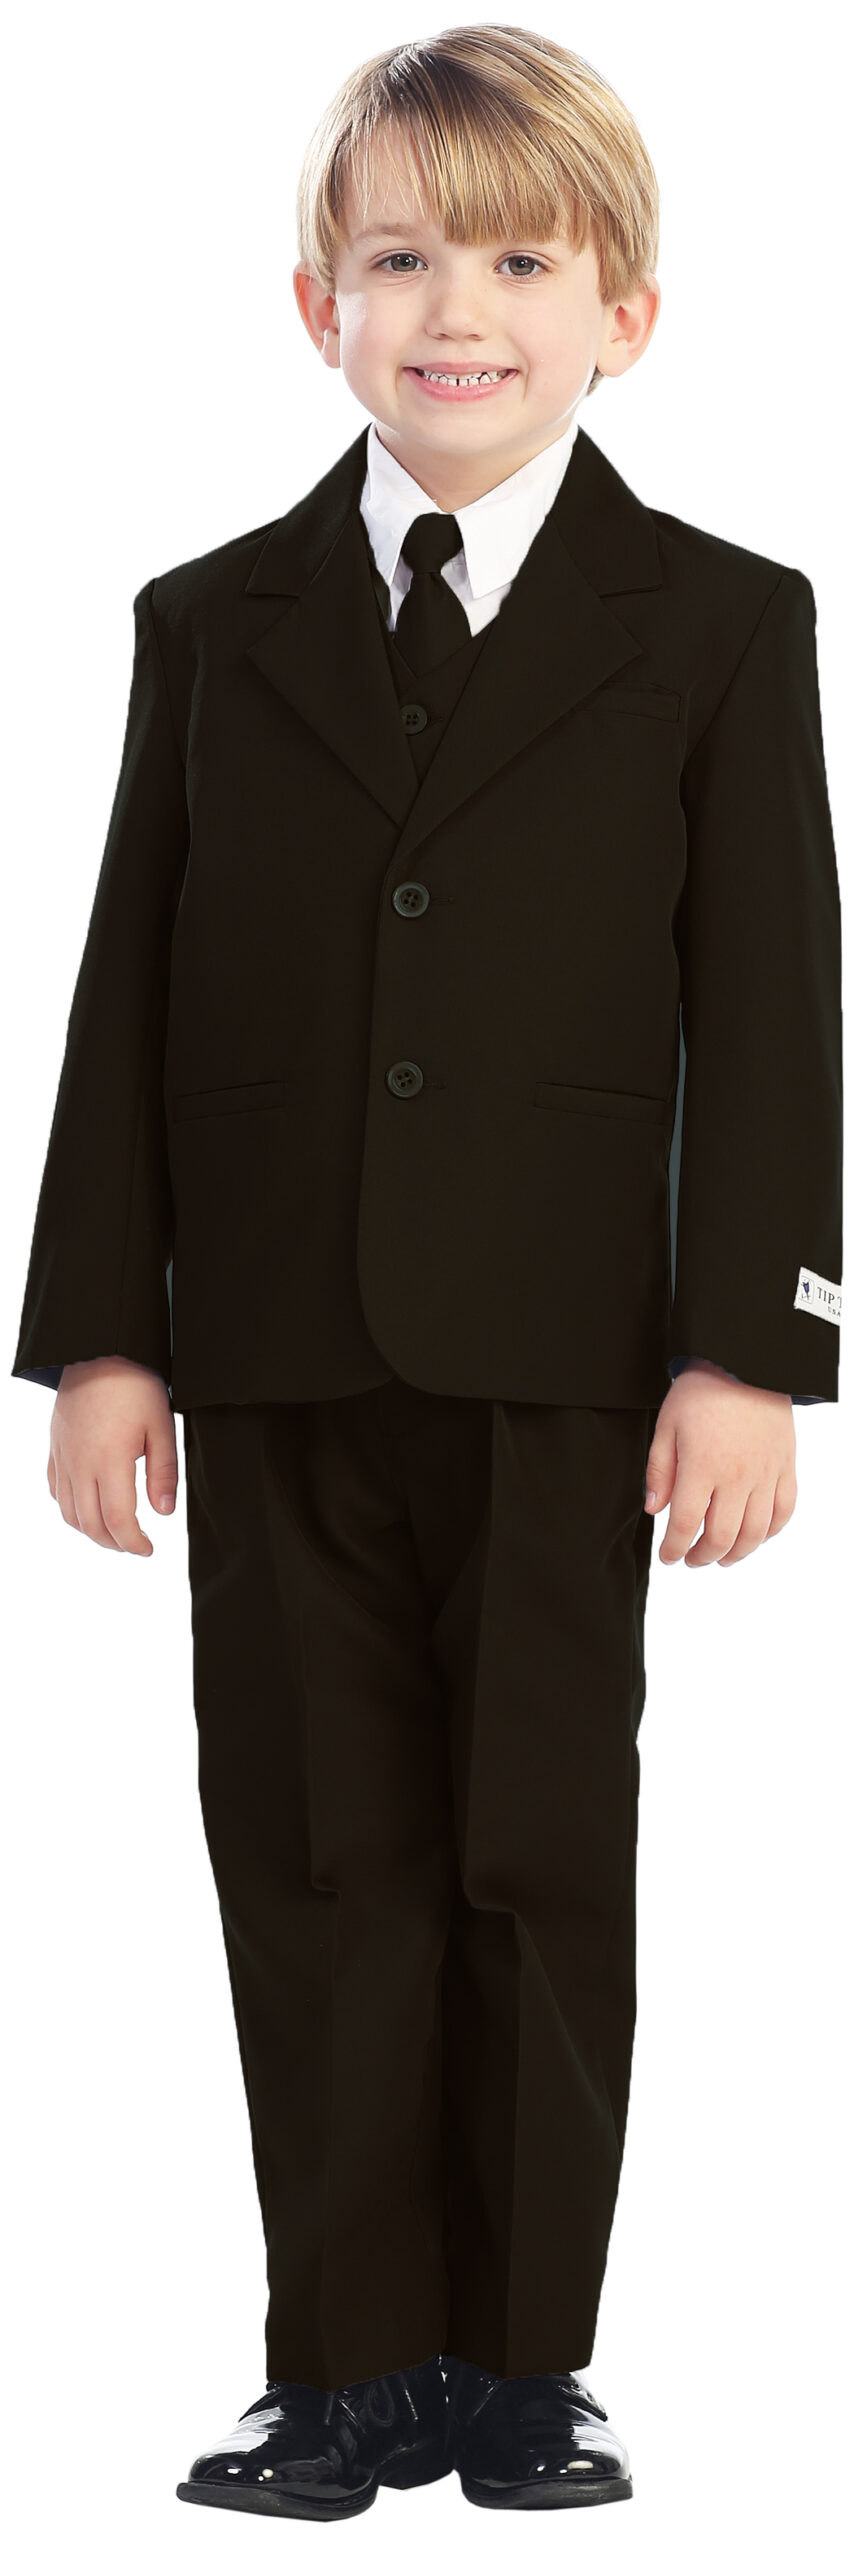 Avery Hill 5-Piece Boy's 2-Button Dress Suit Full-Back Vest - Brown Size 18